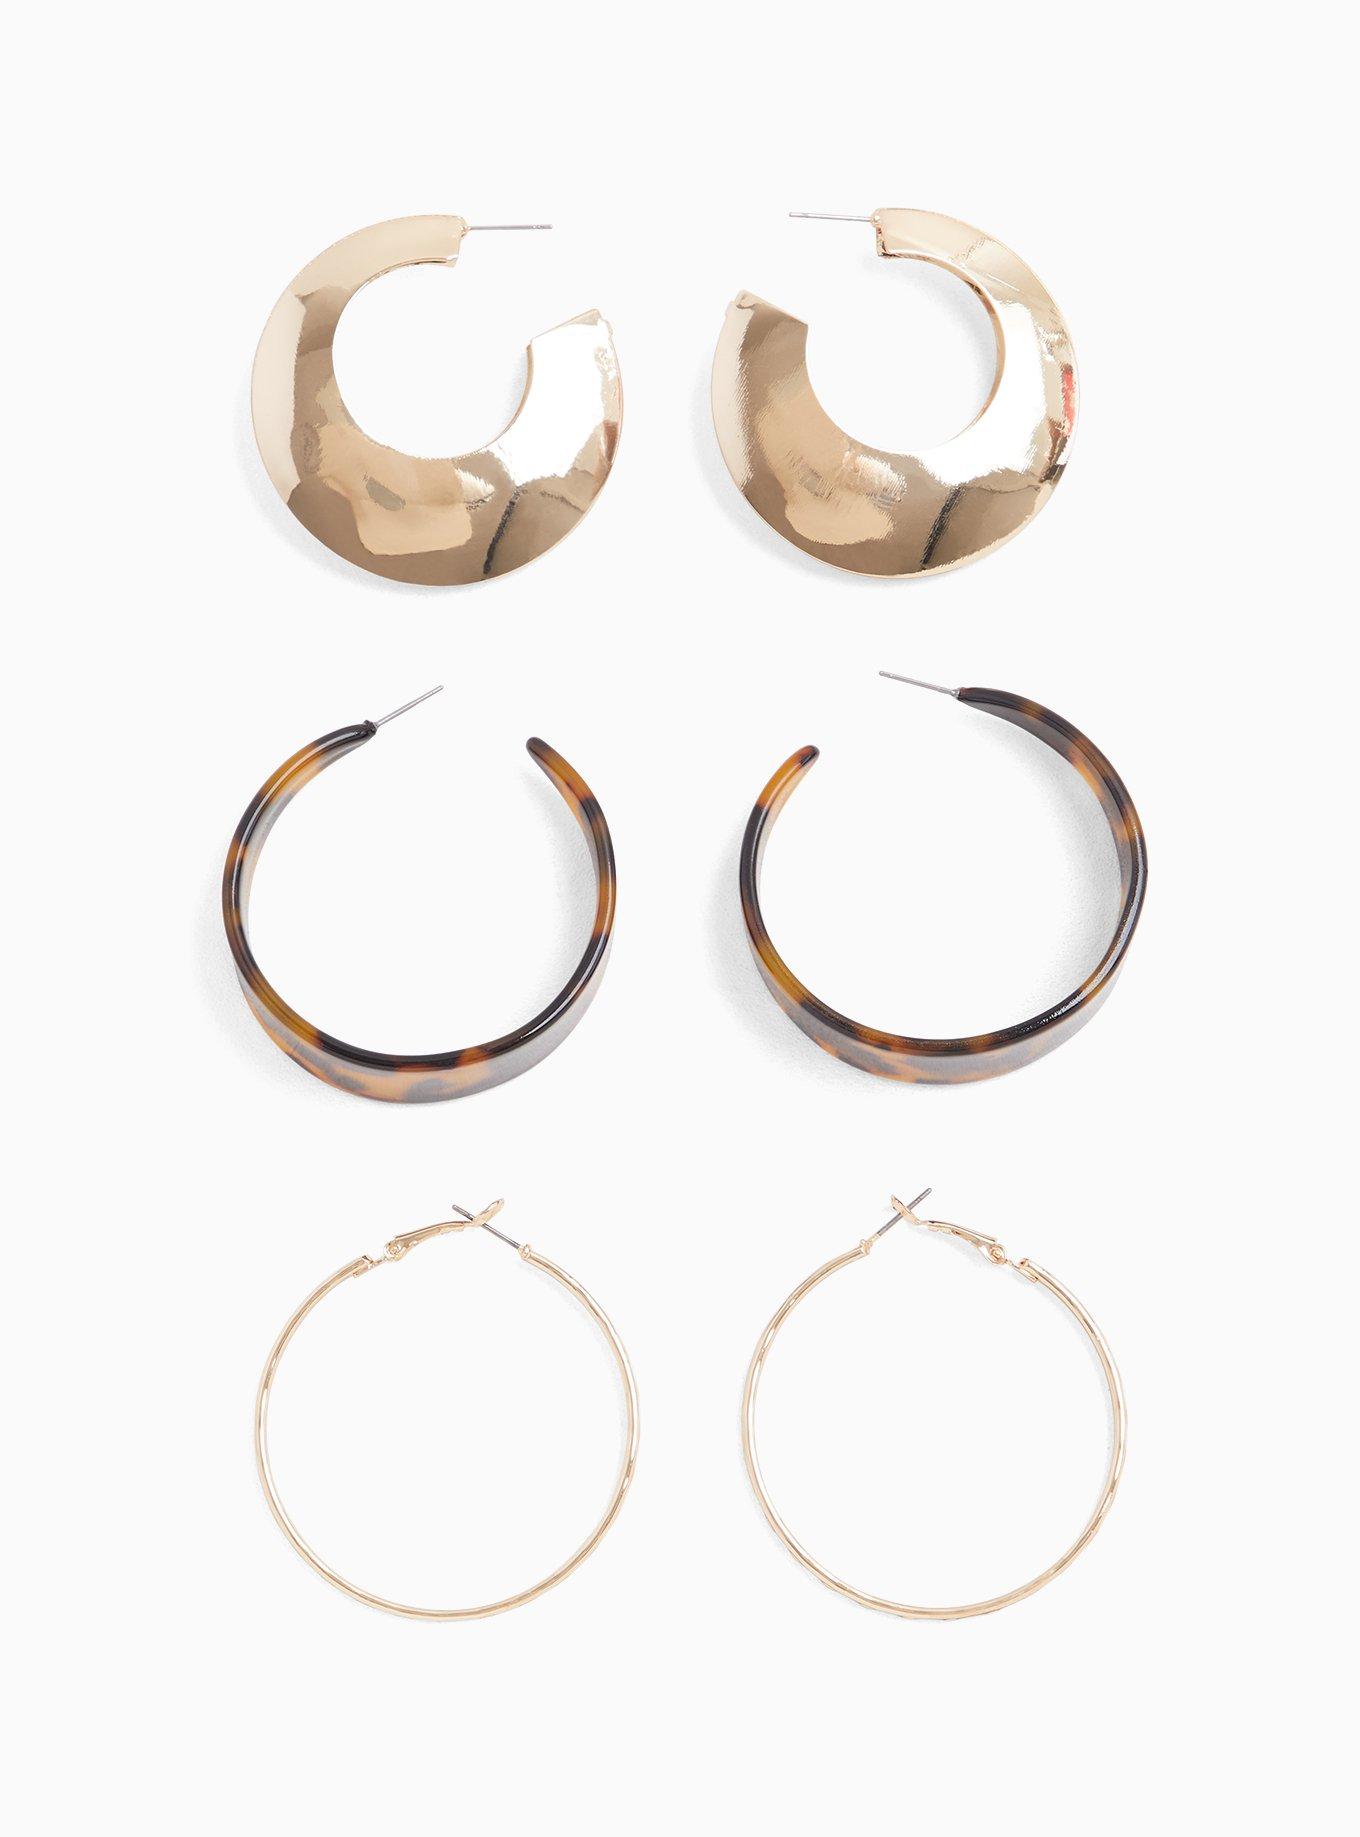 Plus Size - Tortoiseshell & Gold-Tone Hoop Earring Set - Set of 3 - Torrid